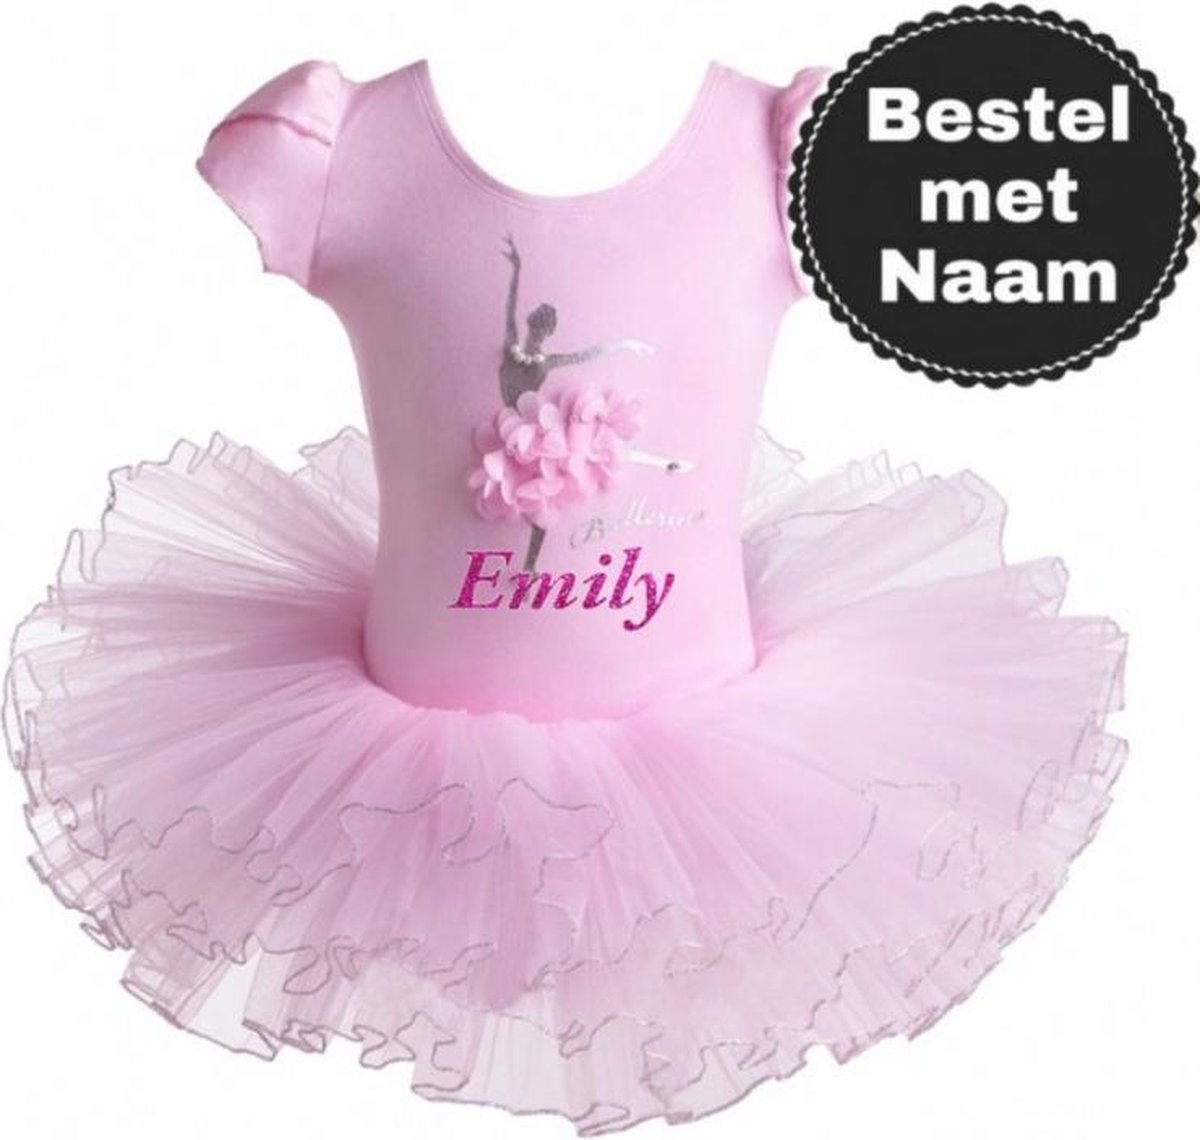 Balletpakje Ballerina + Eigen naam + Tutu - roze - Ballet - maat 128-134 prinsessen tutu verkleed jurk meisje